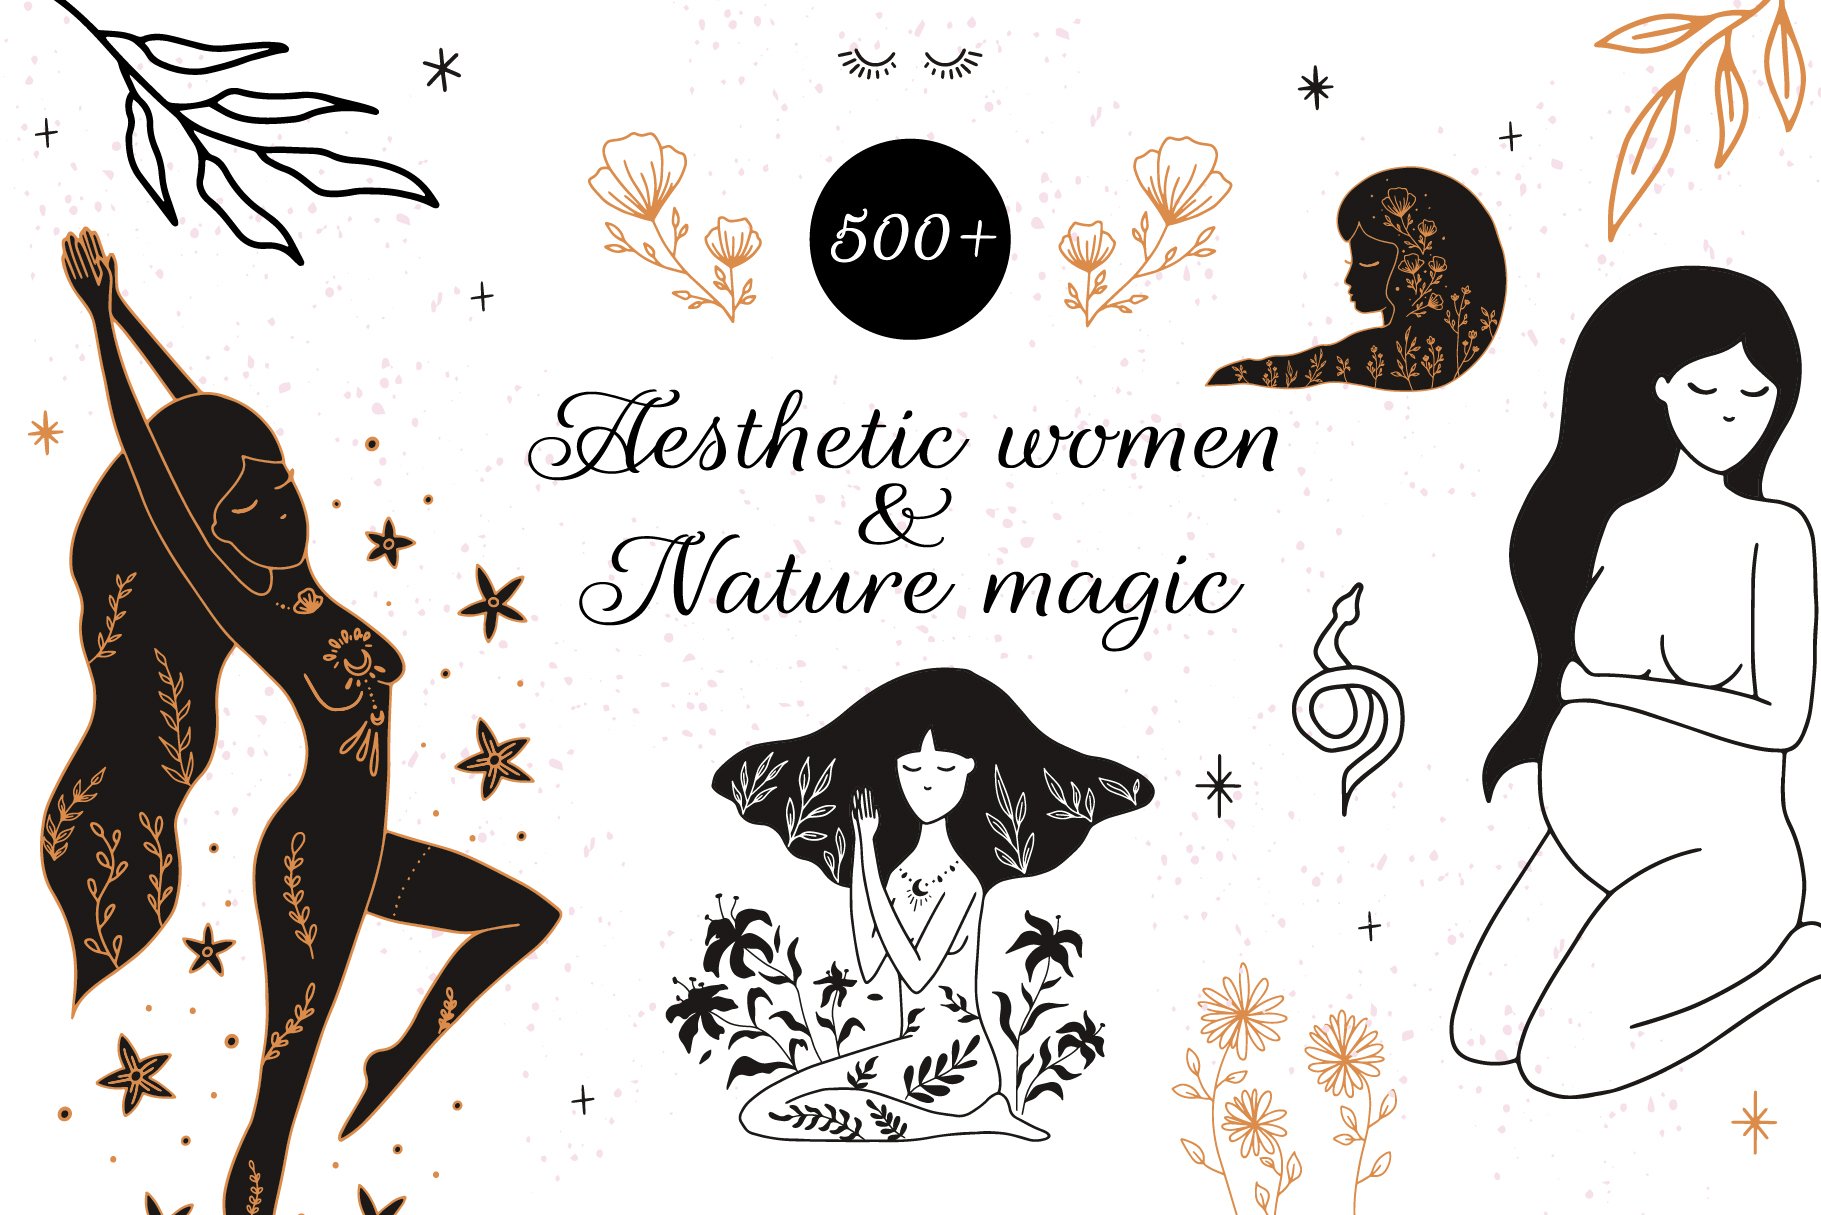 Aesthetic women & Nature magic cover image.